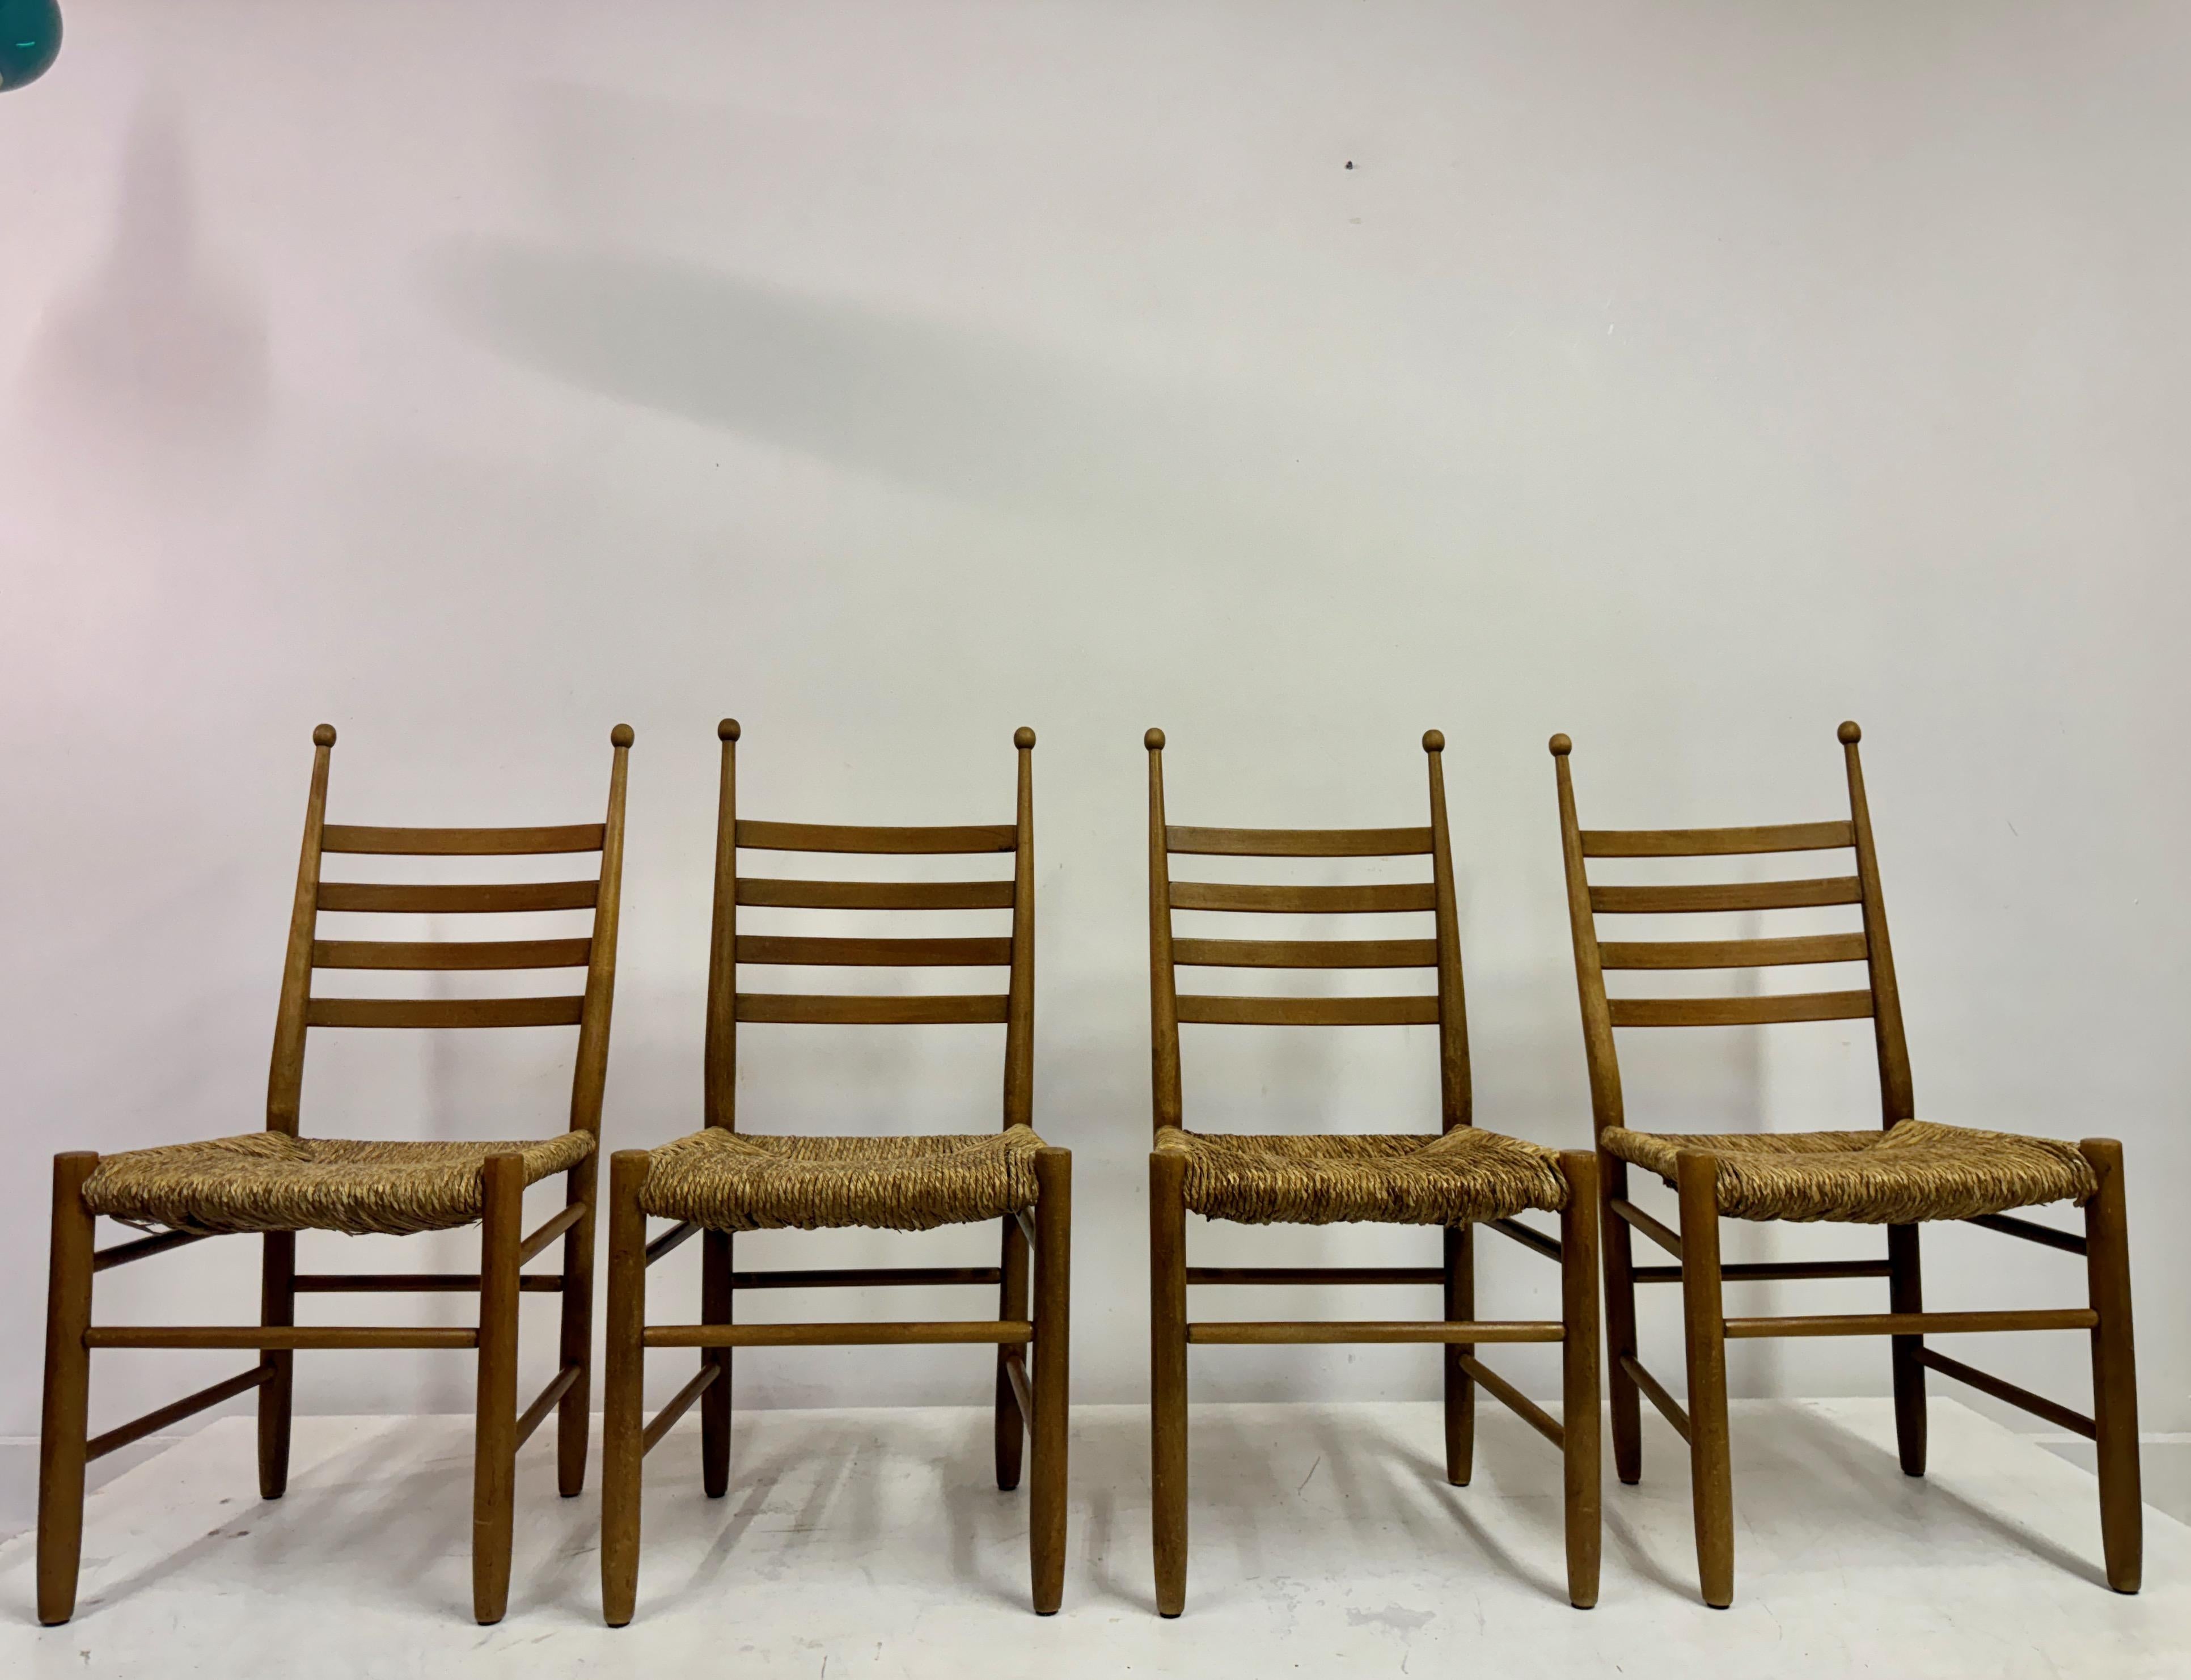 Four dining chairs

Beech

Rush seats

Ladderbacks

Ball finials

Seat height 45cm

Netherlands 1960s
